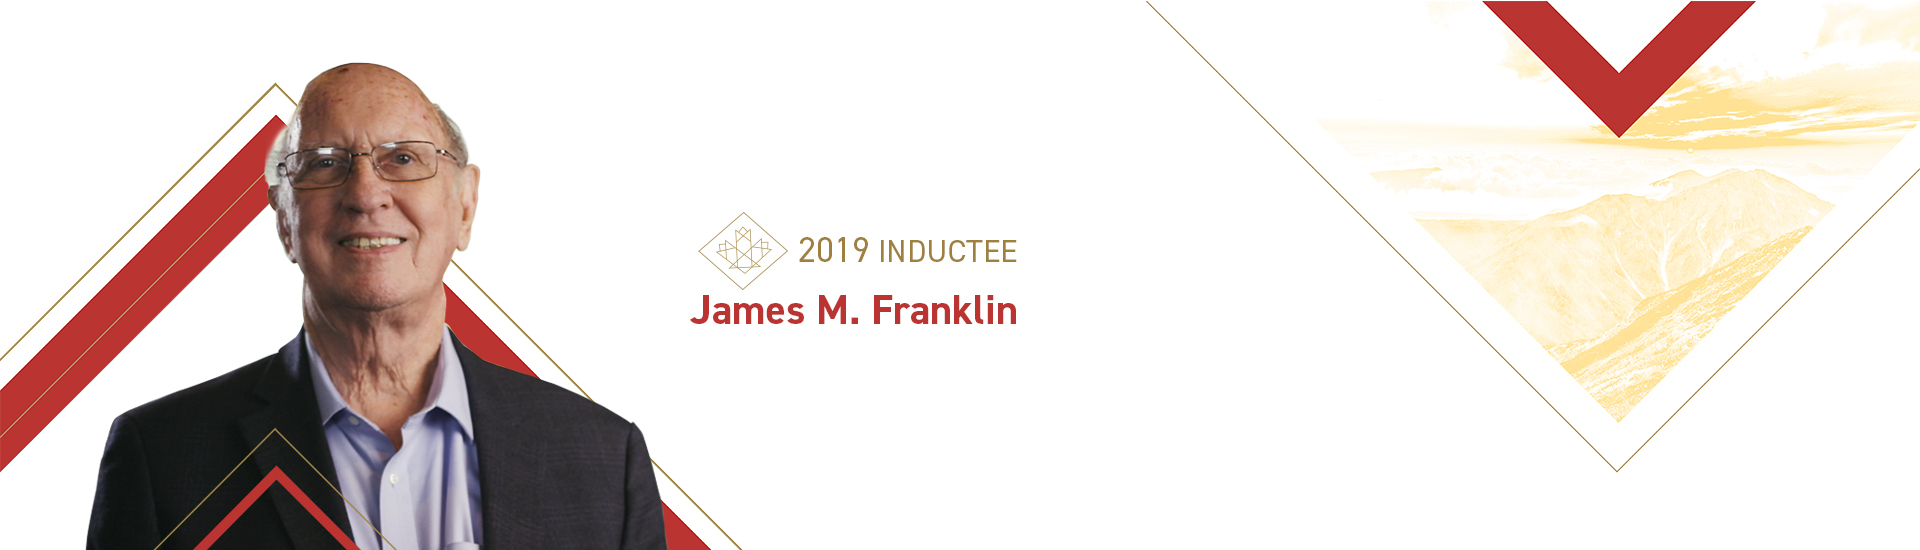 James M. Franklin (b. 1942)